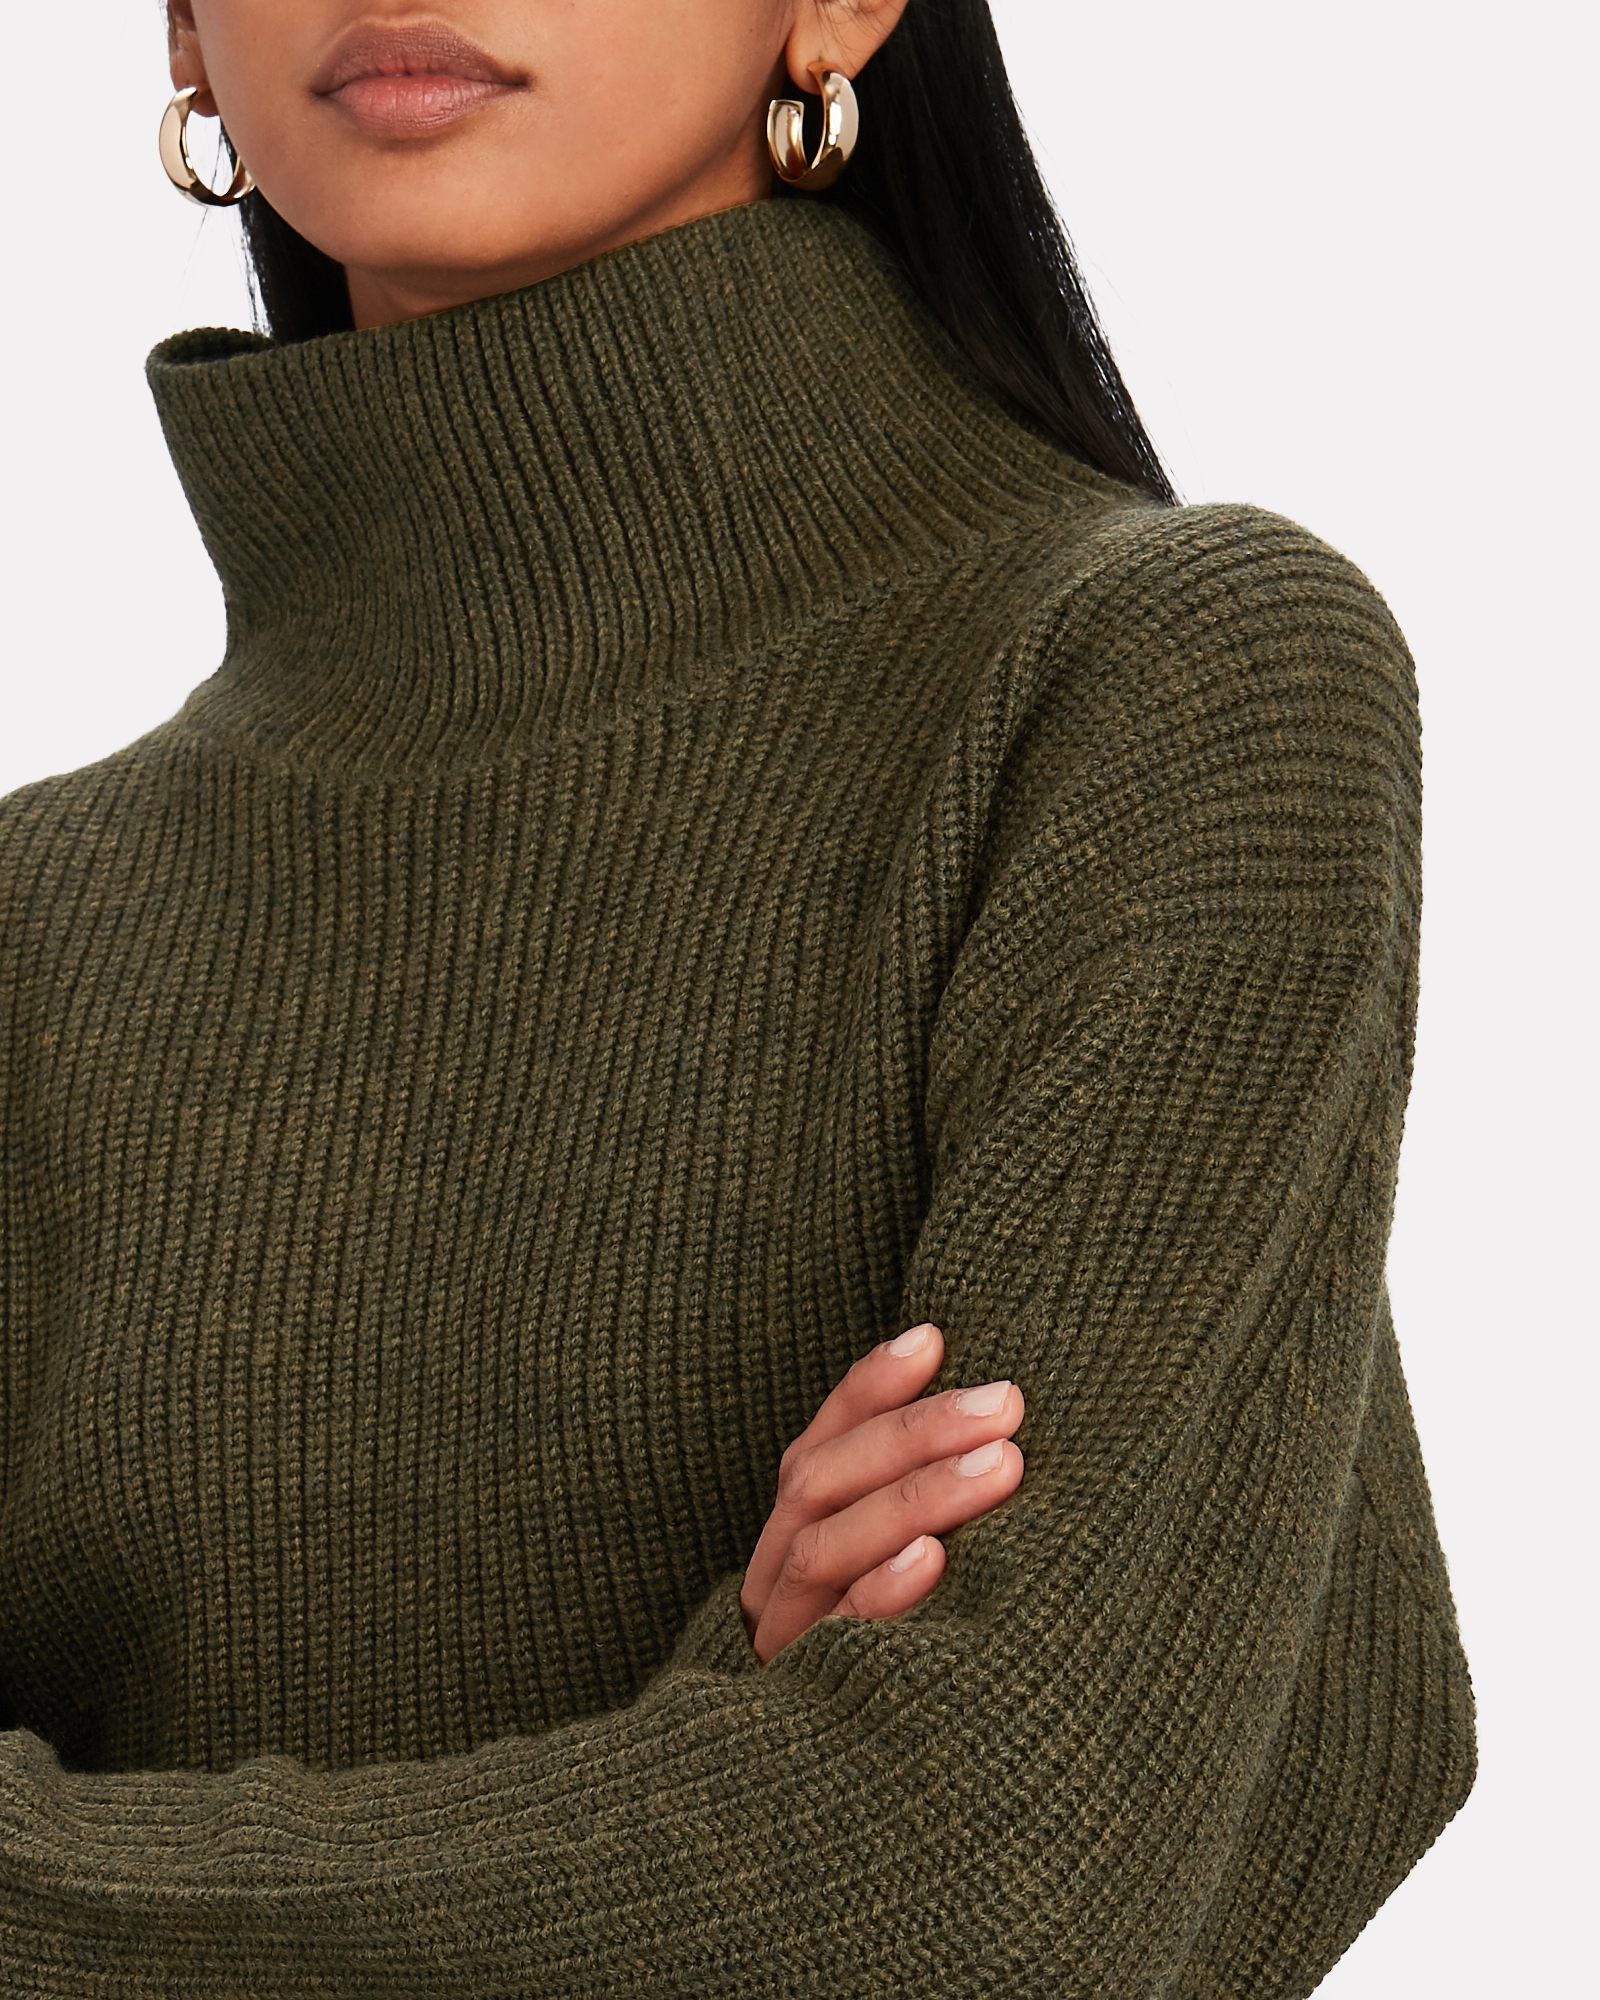 Proenza Schouler Asymmetrical Merino Wool Turtleneck Sweater | INTERMIX®